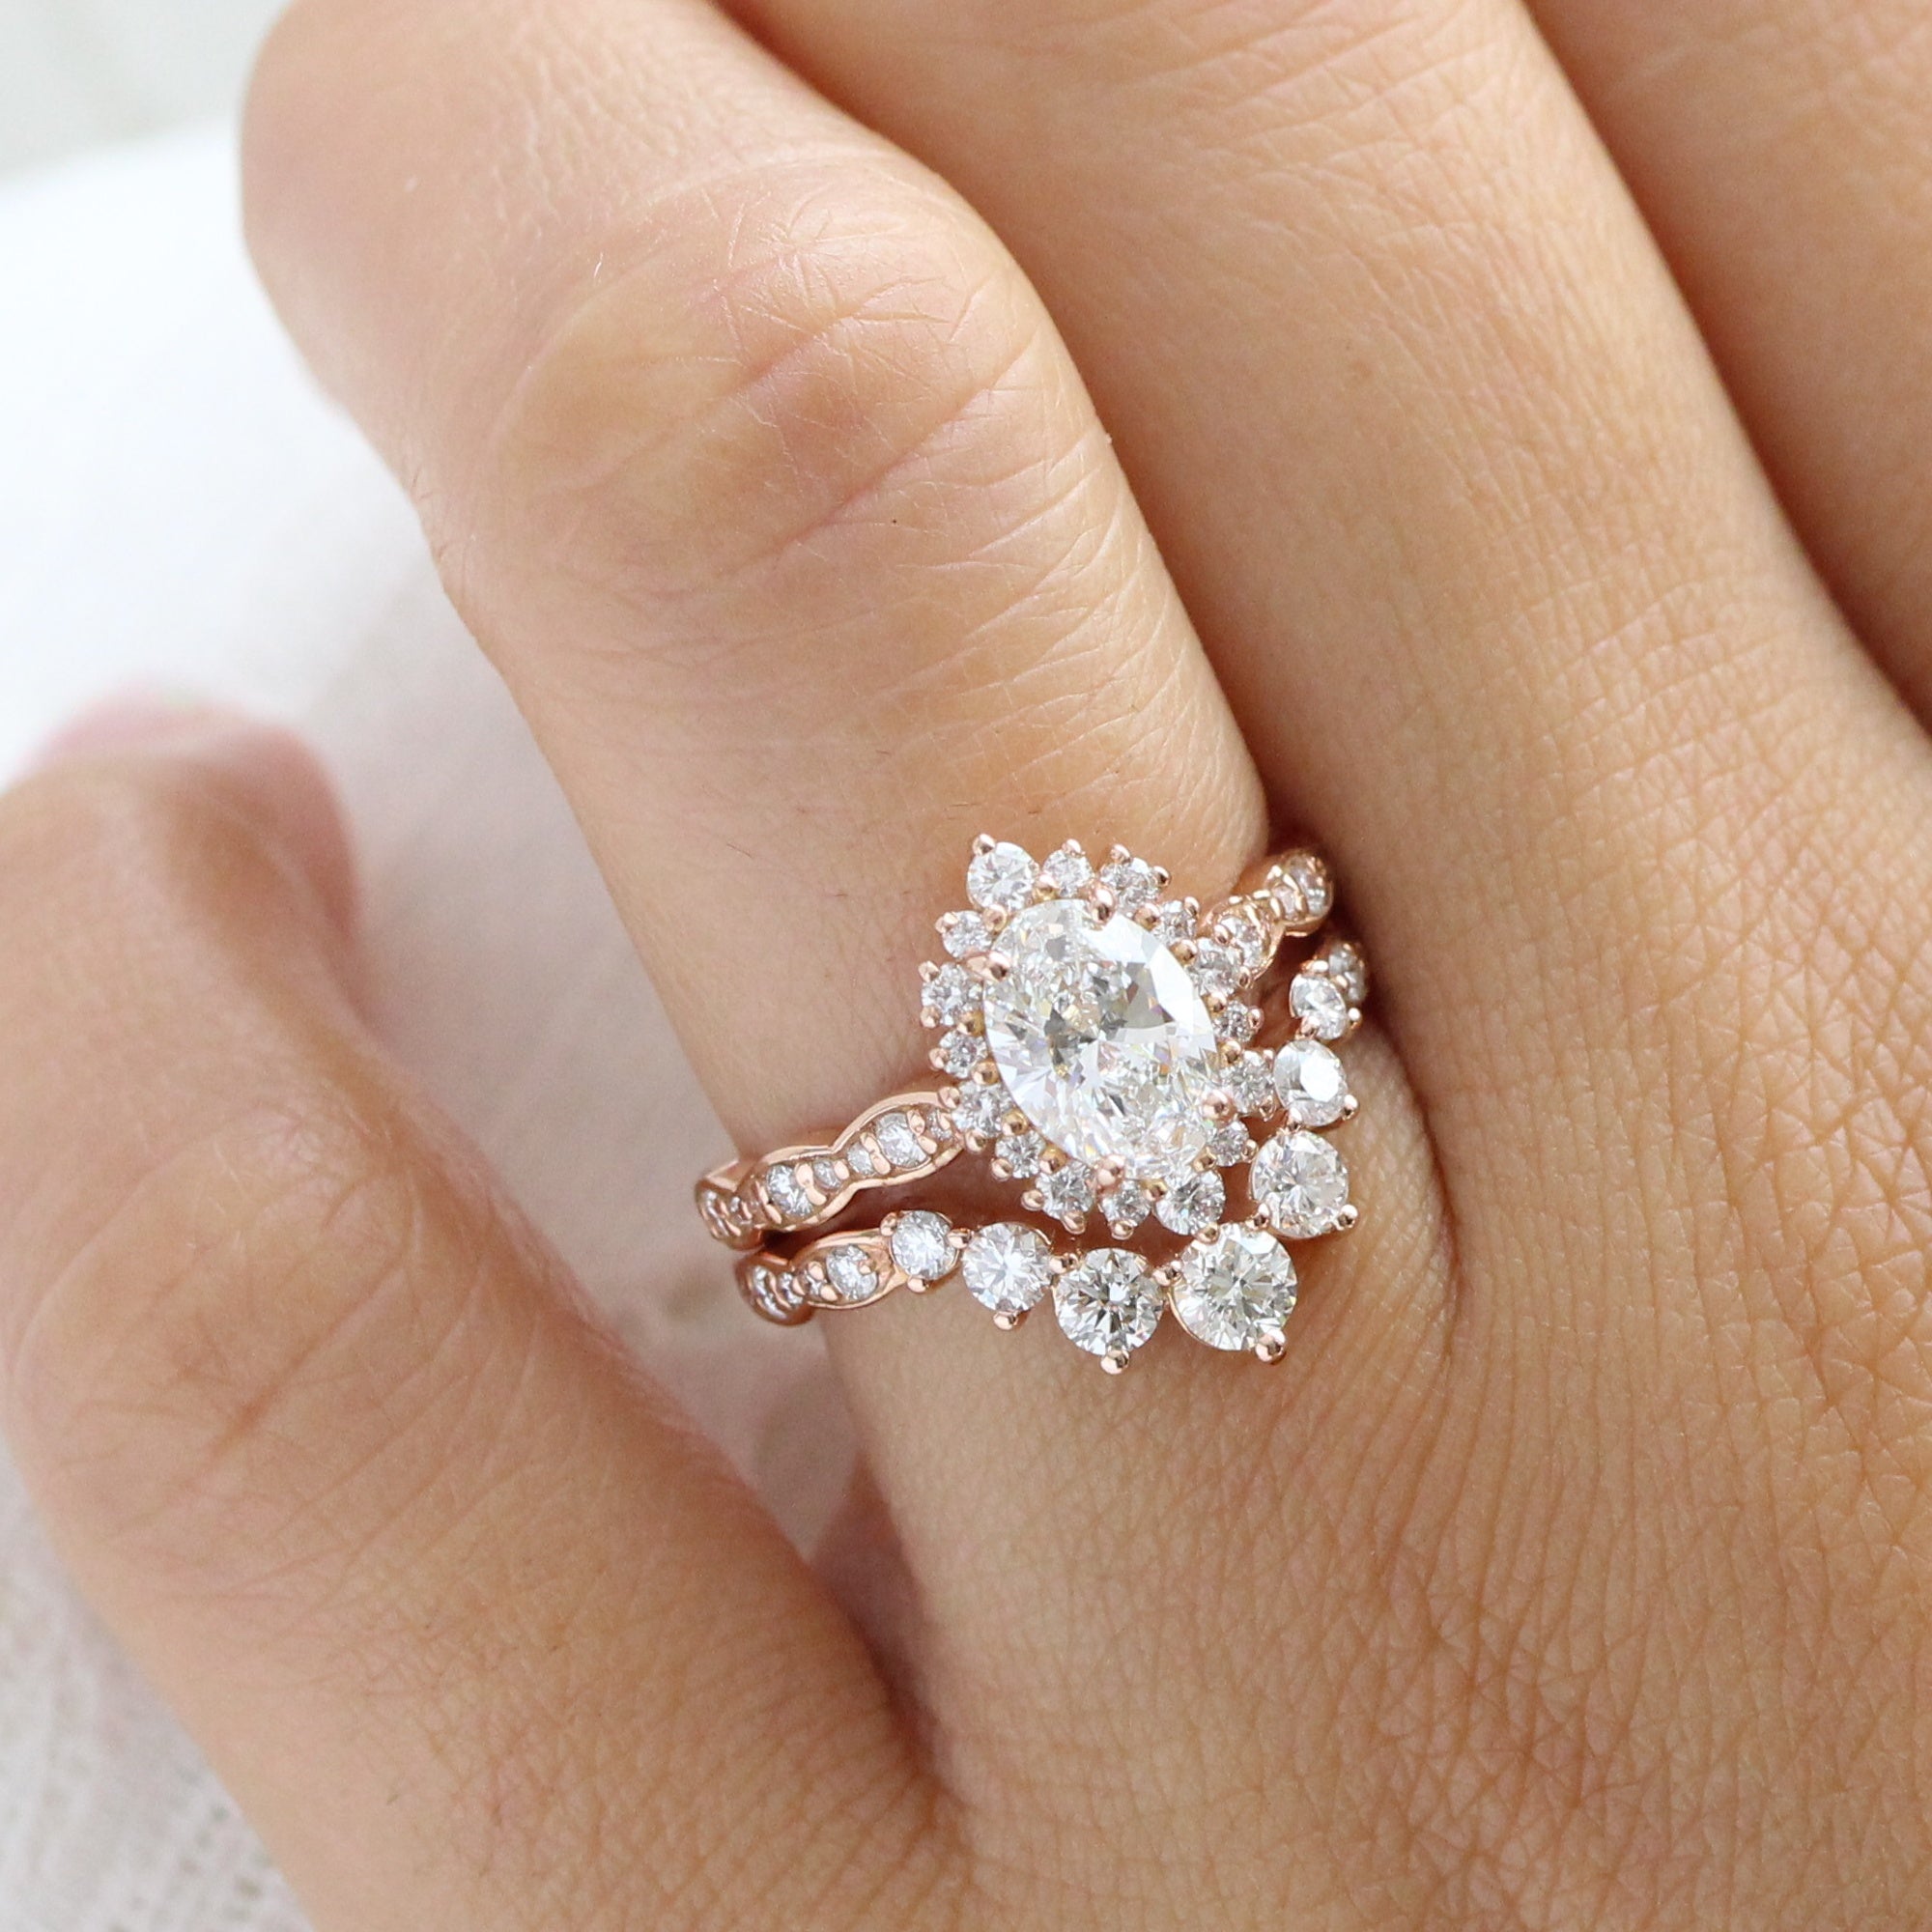 lab diamond ring stack rose gold oval diamond halo engagement ring set La More Design Jewelry